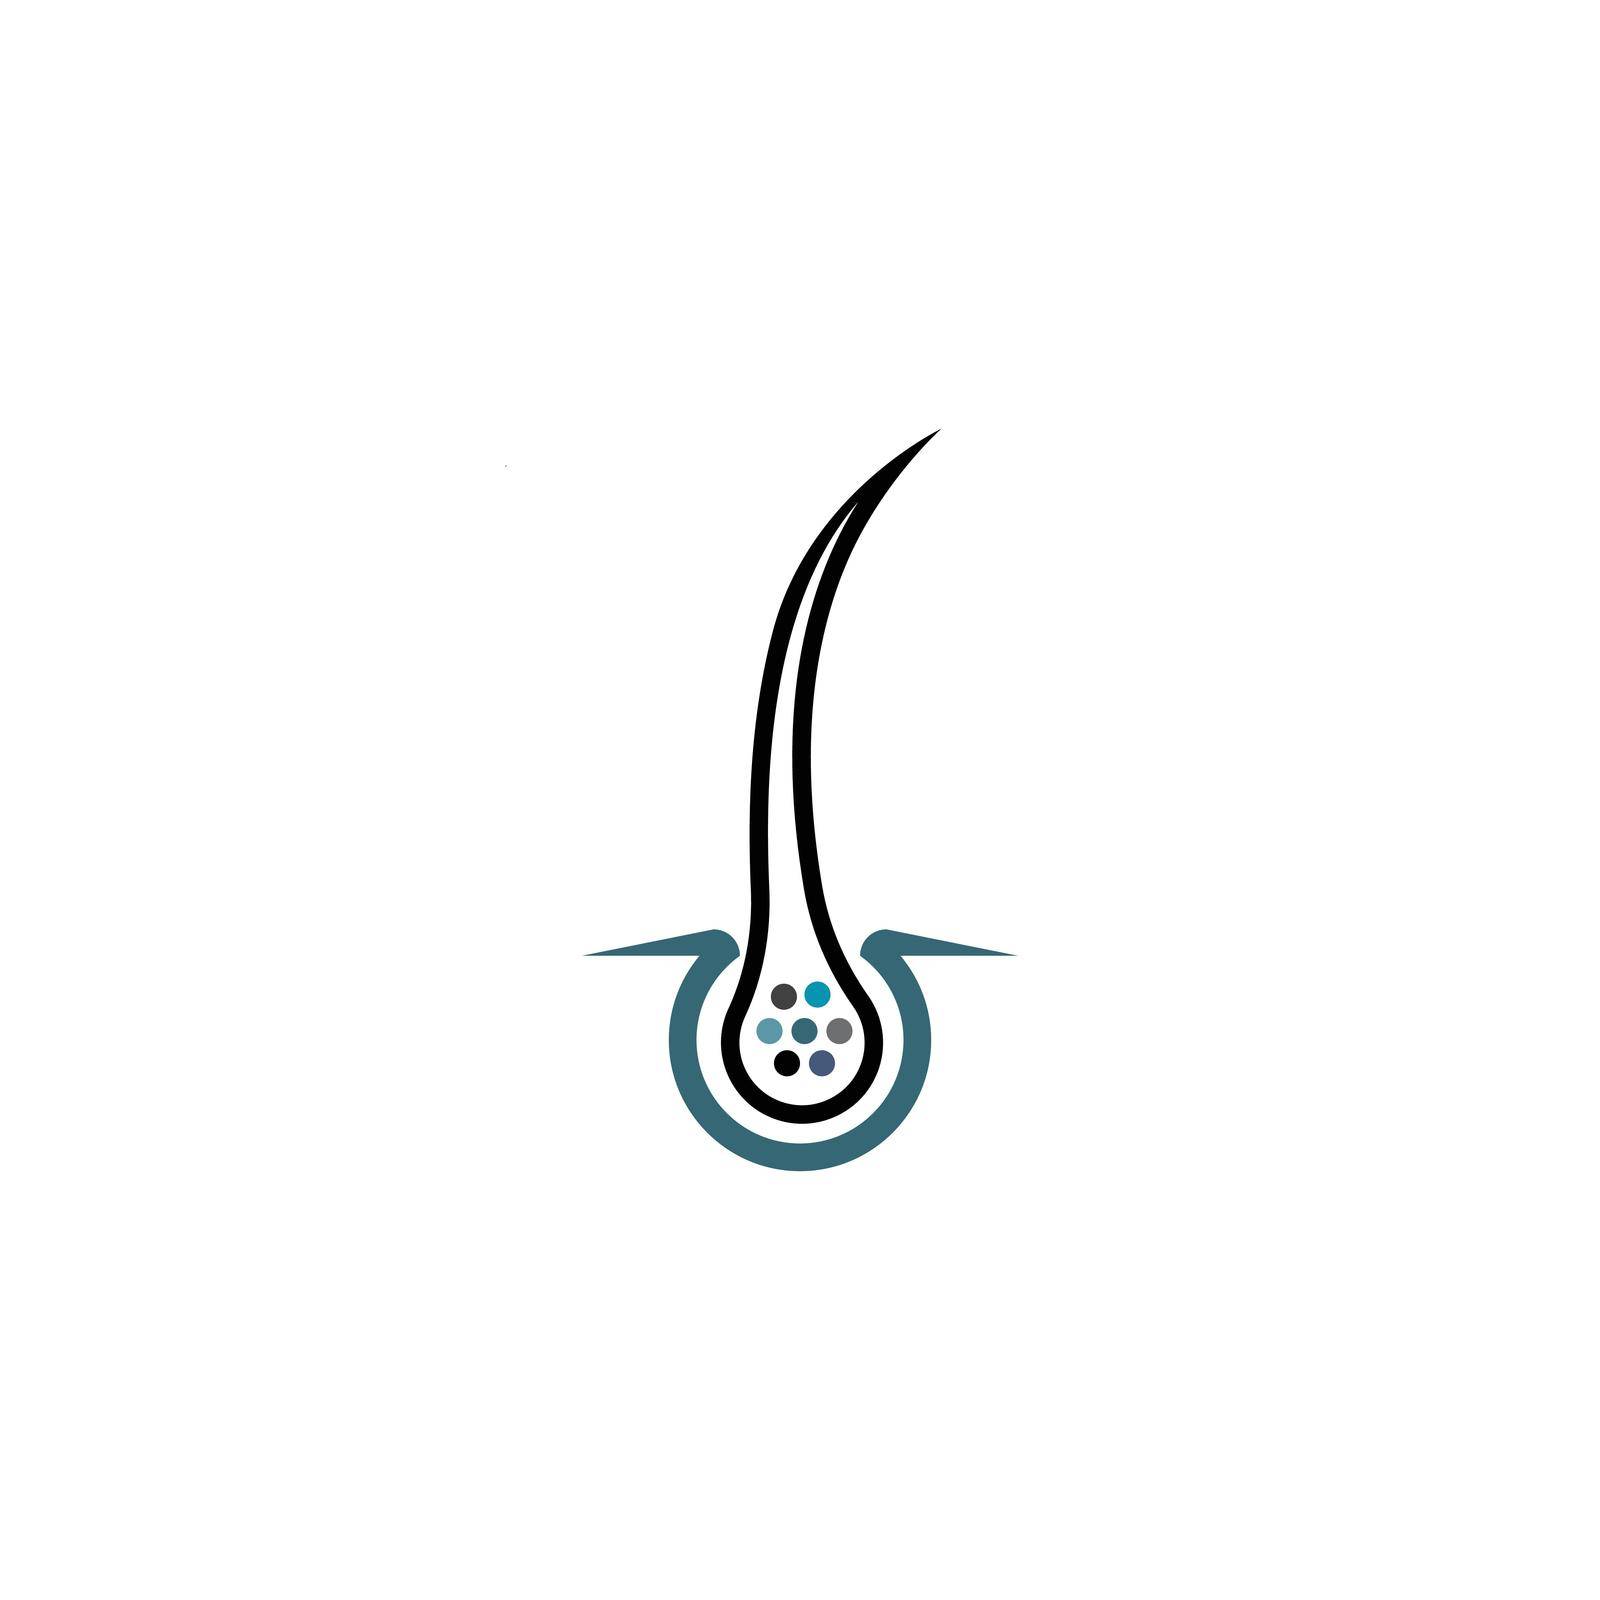 hair follicle symbol by hasan02